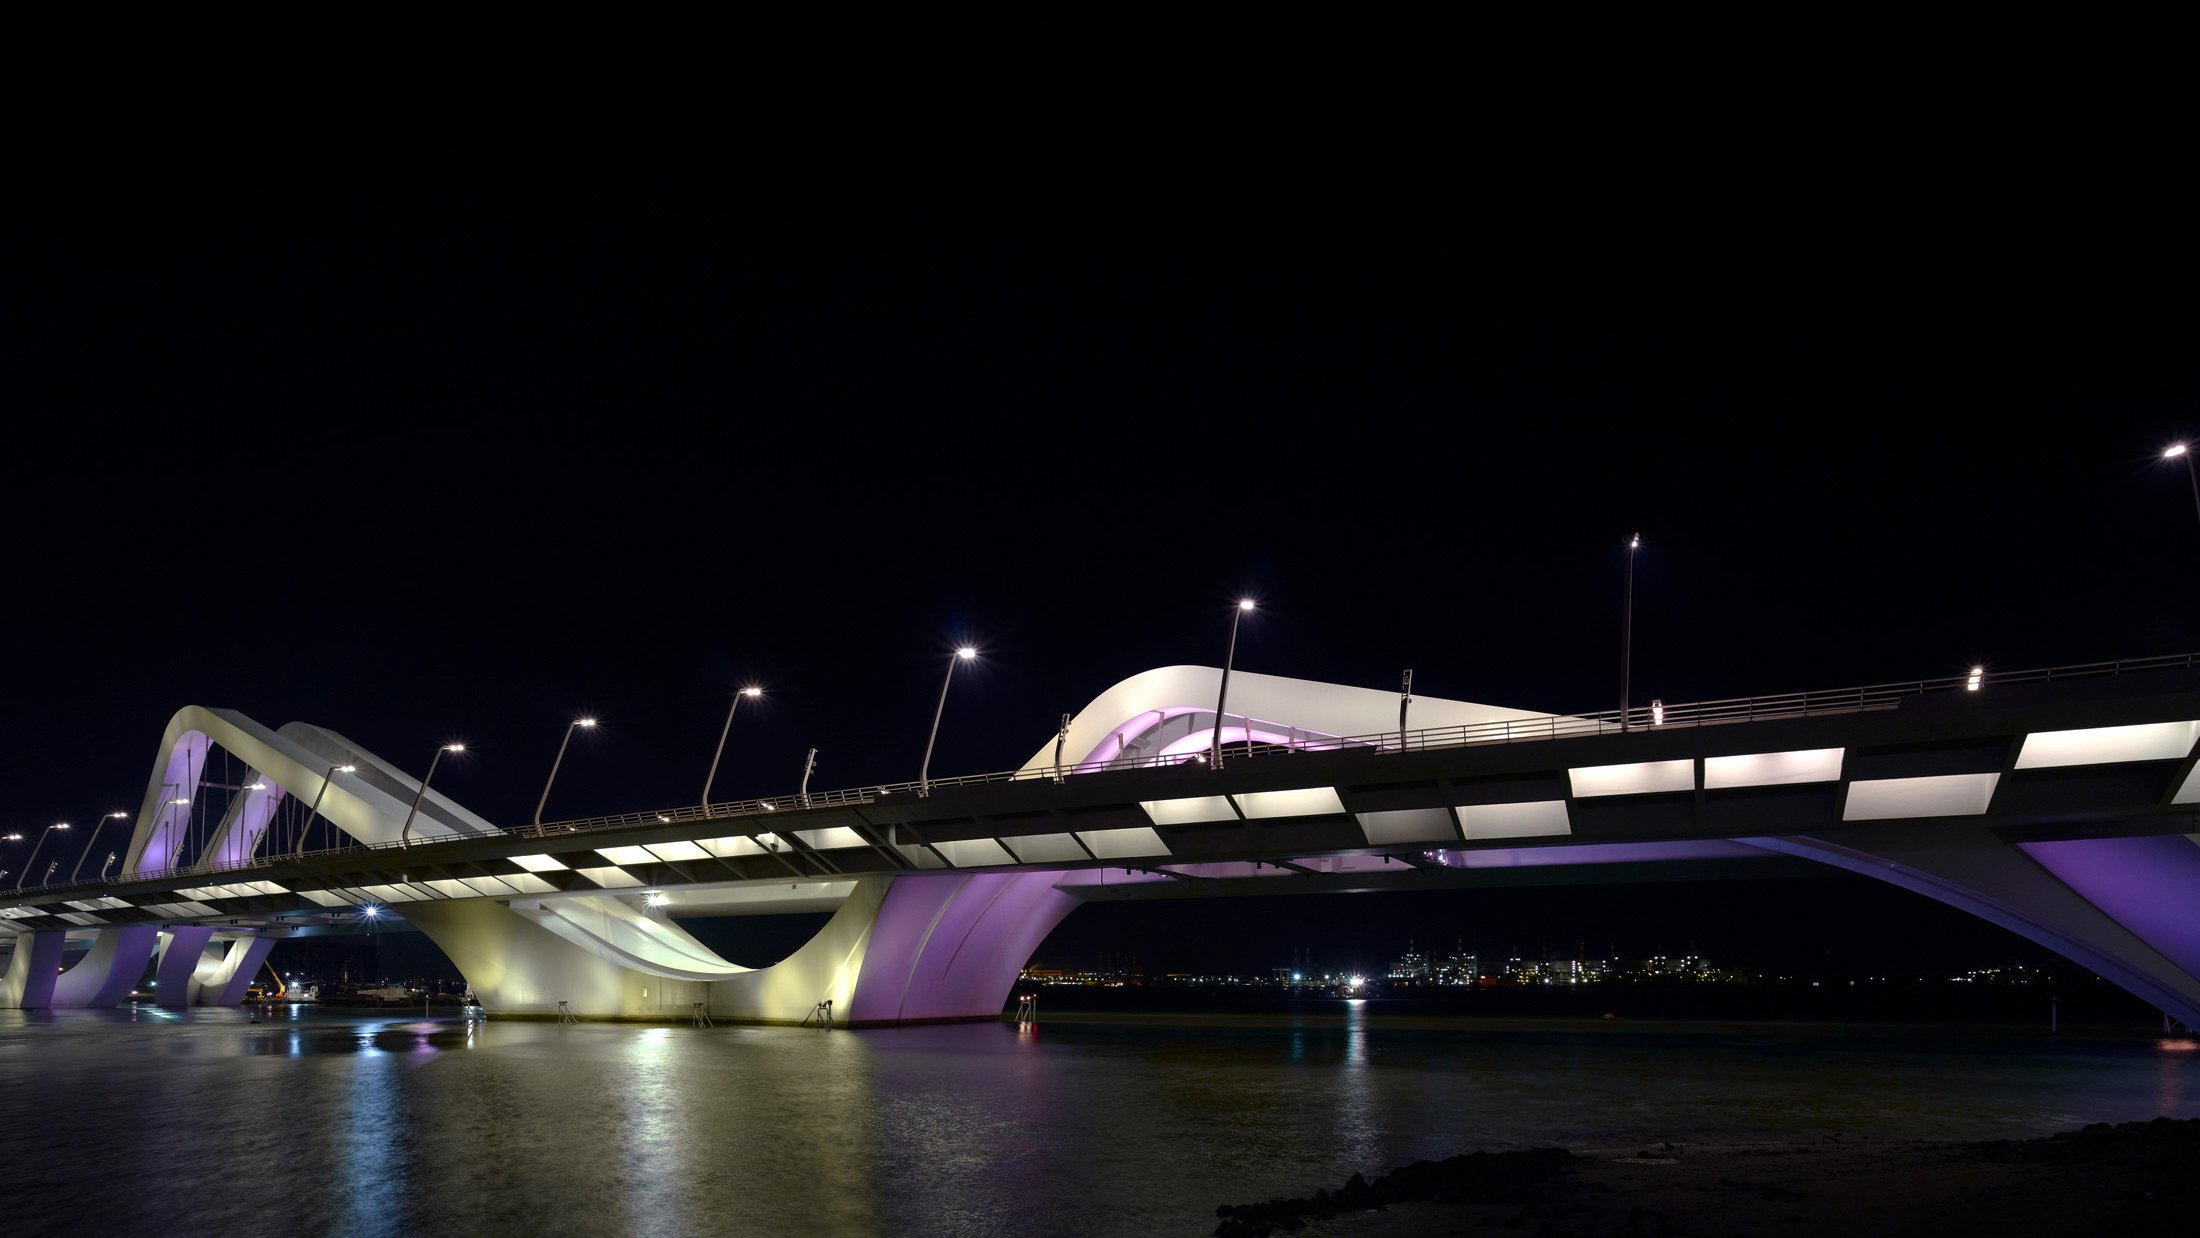 The Sheikh Zayed Bridge in Abu Dhabi. Photo: Christian Richters